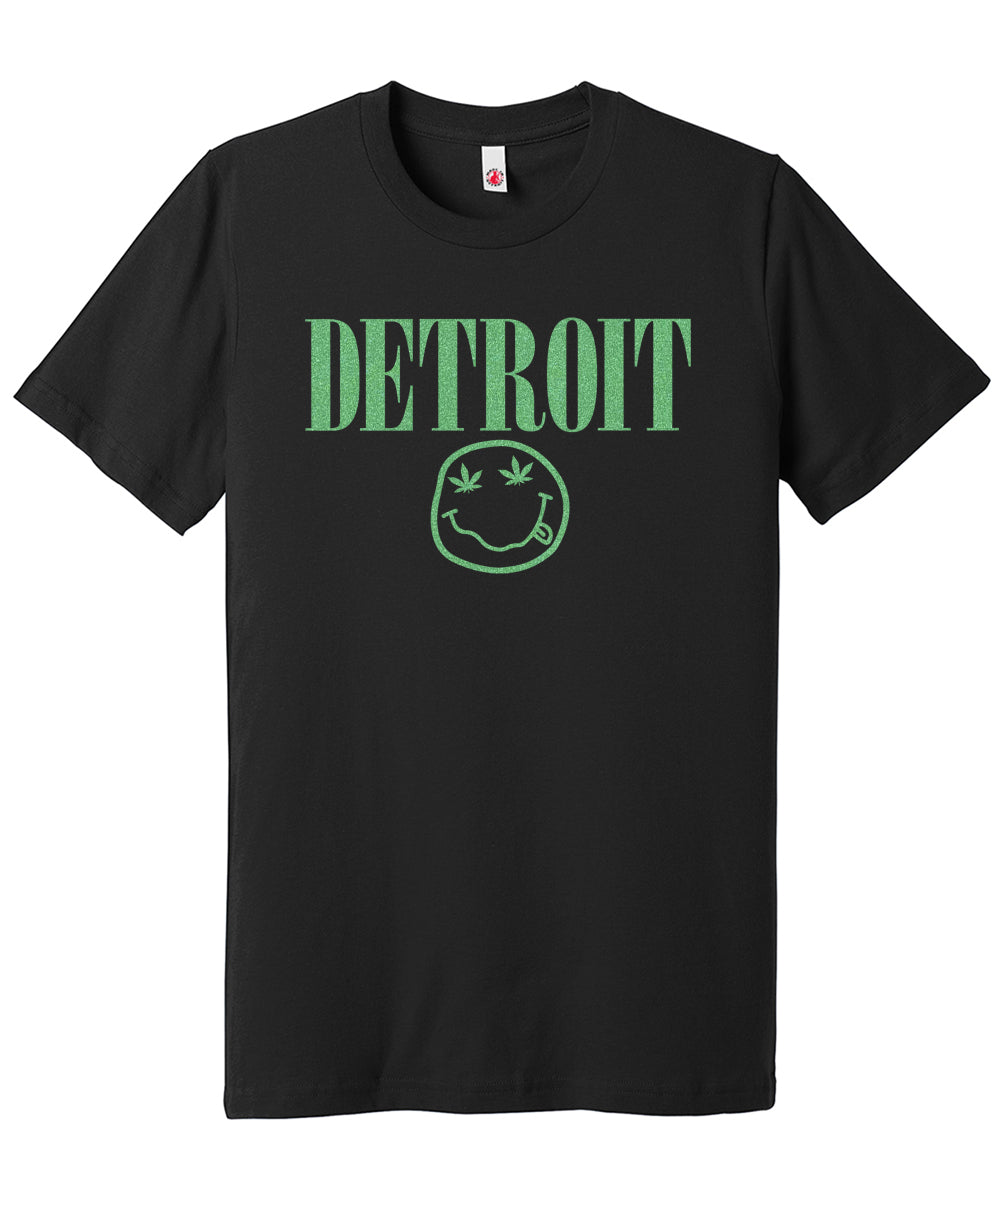 Detroit Smiley